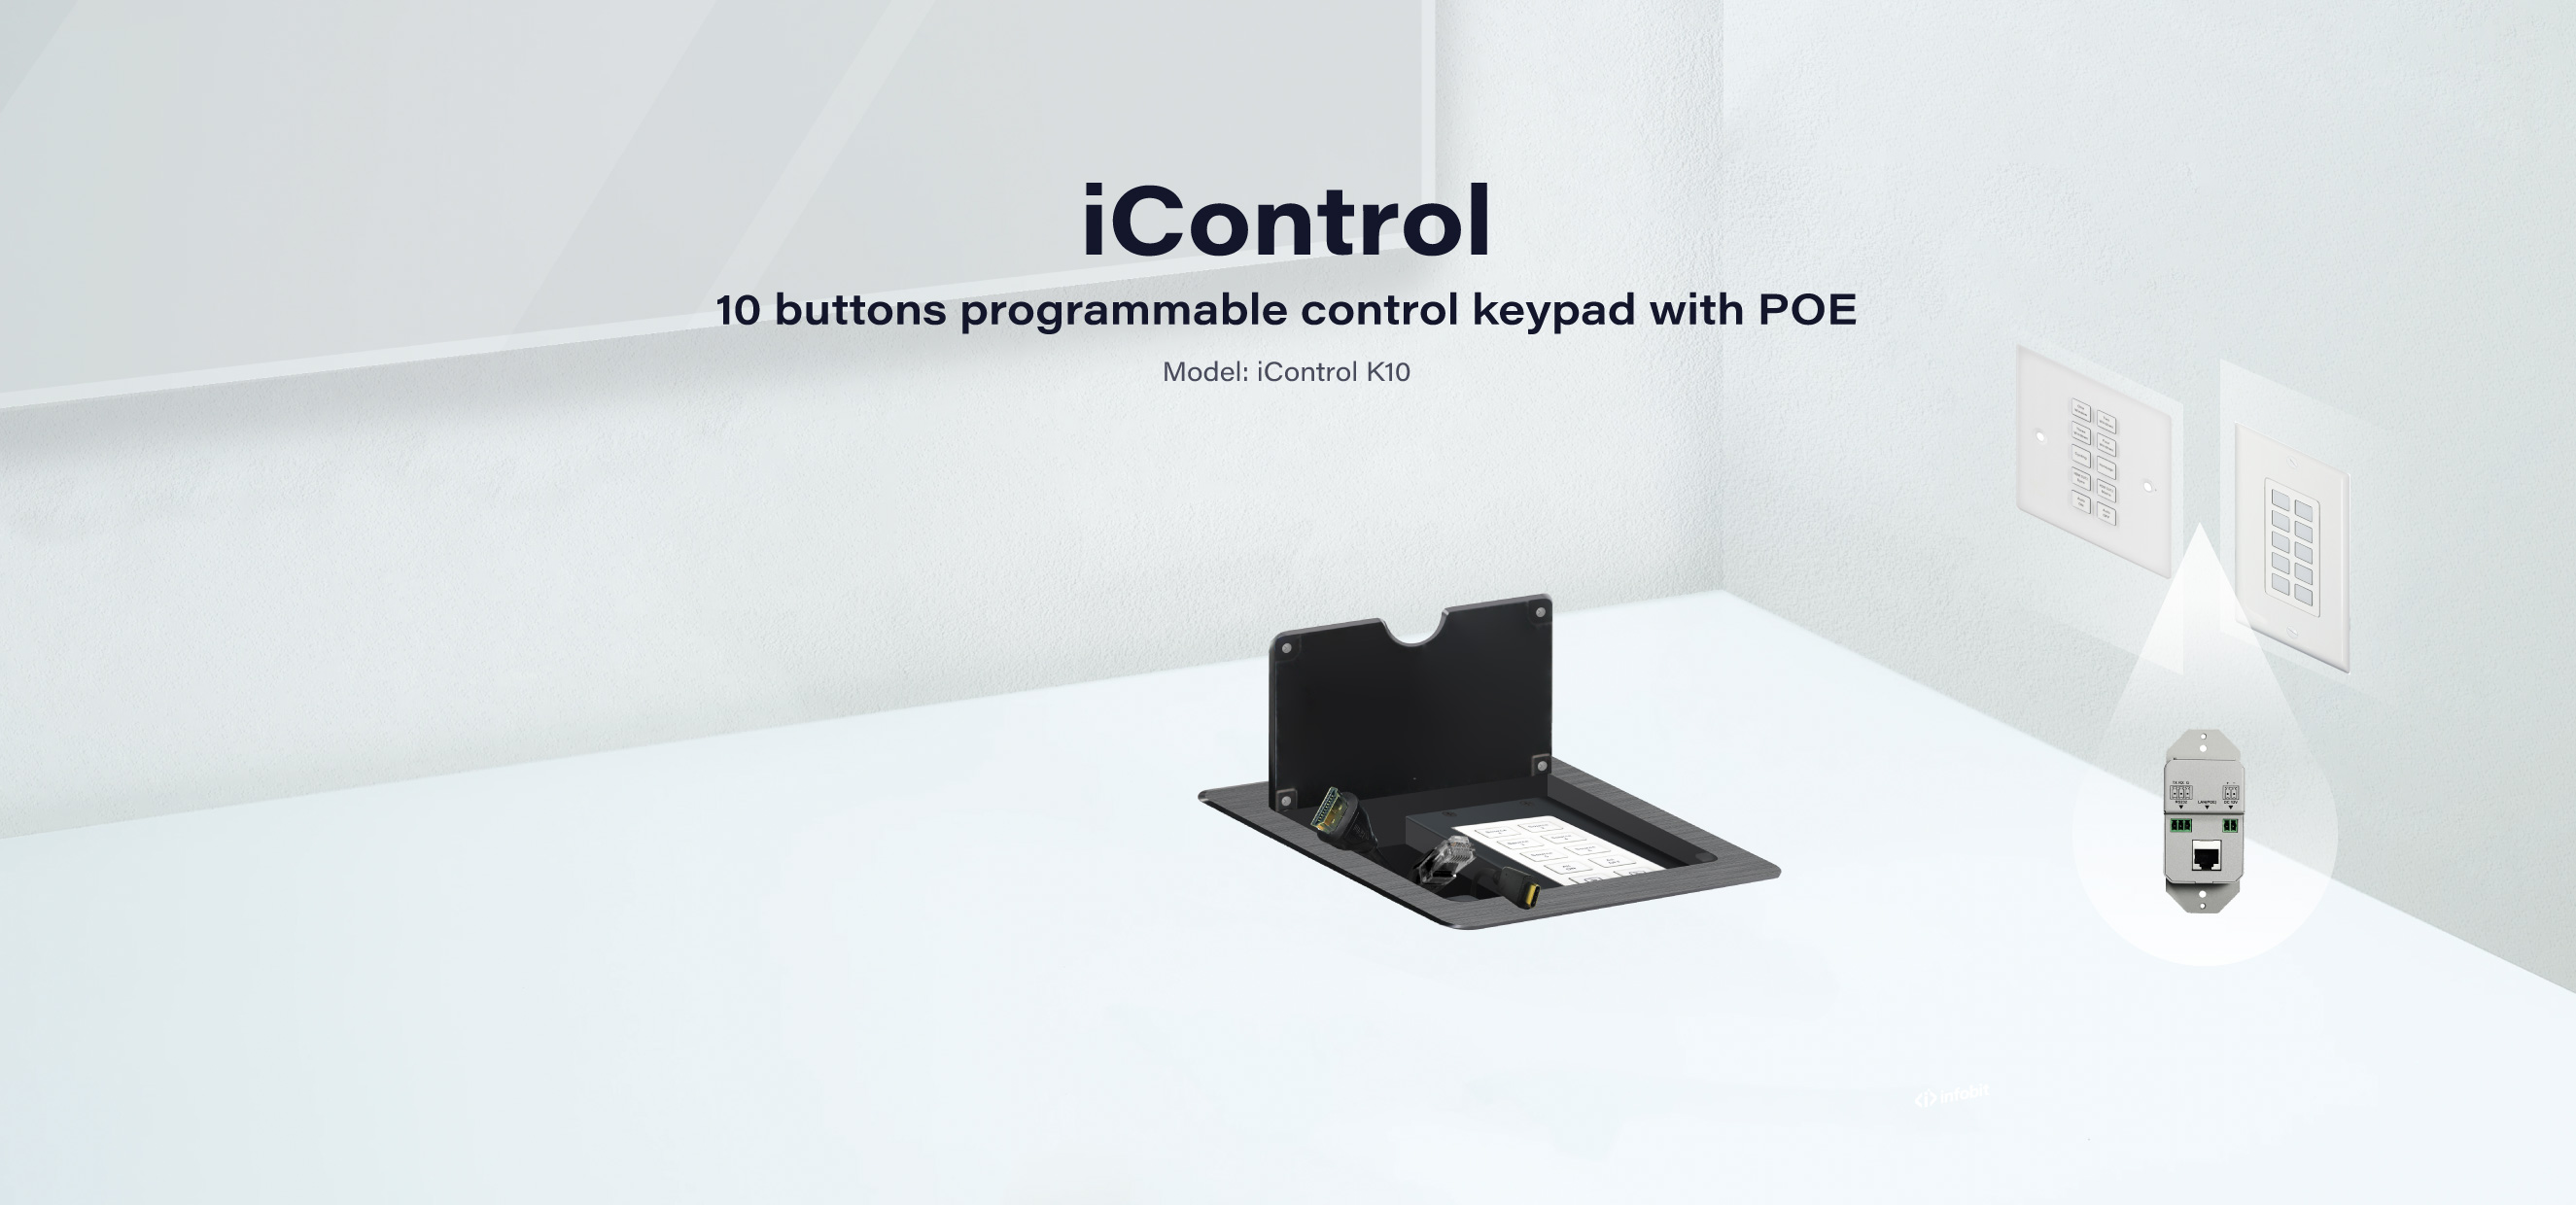 iControl K10 10 buttons control keypad